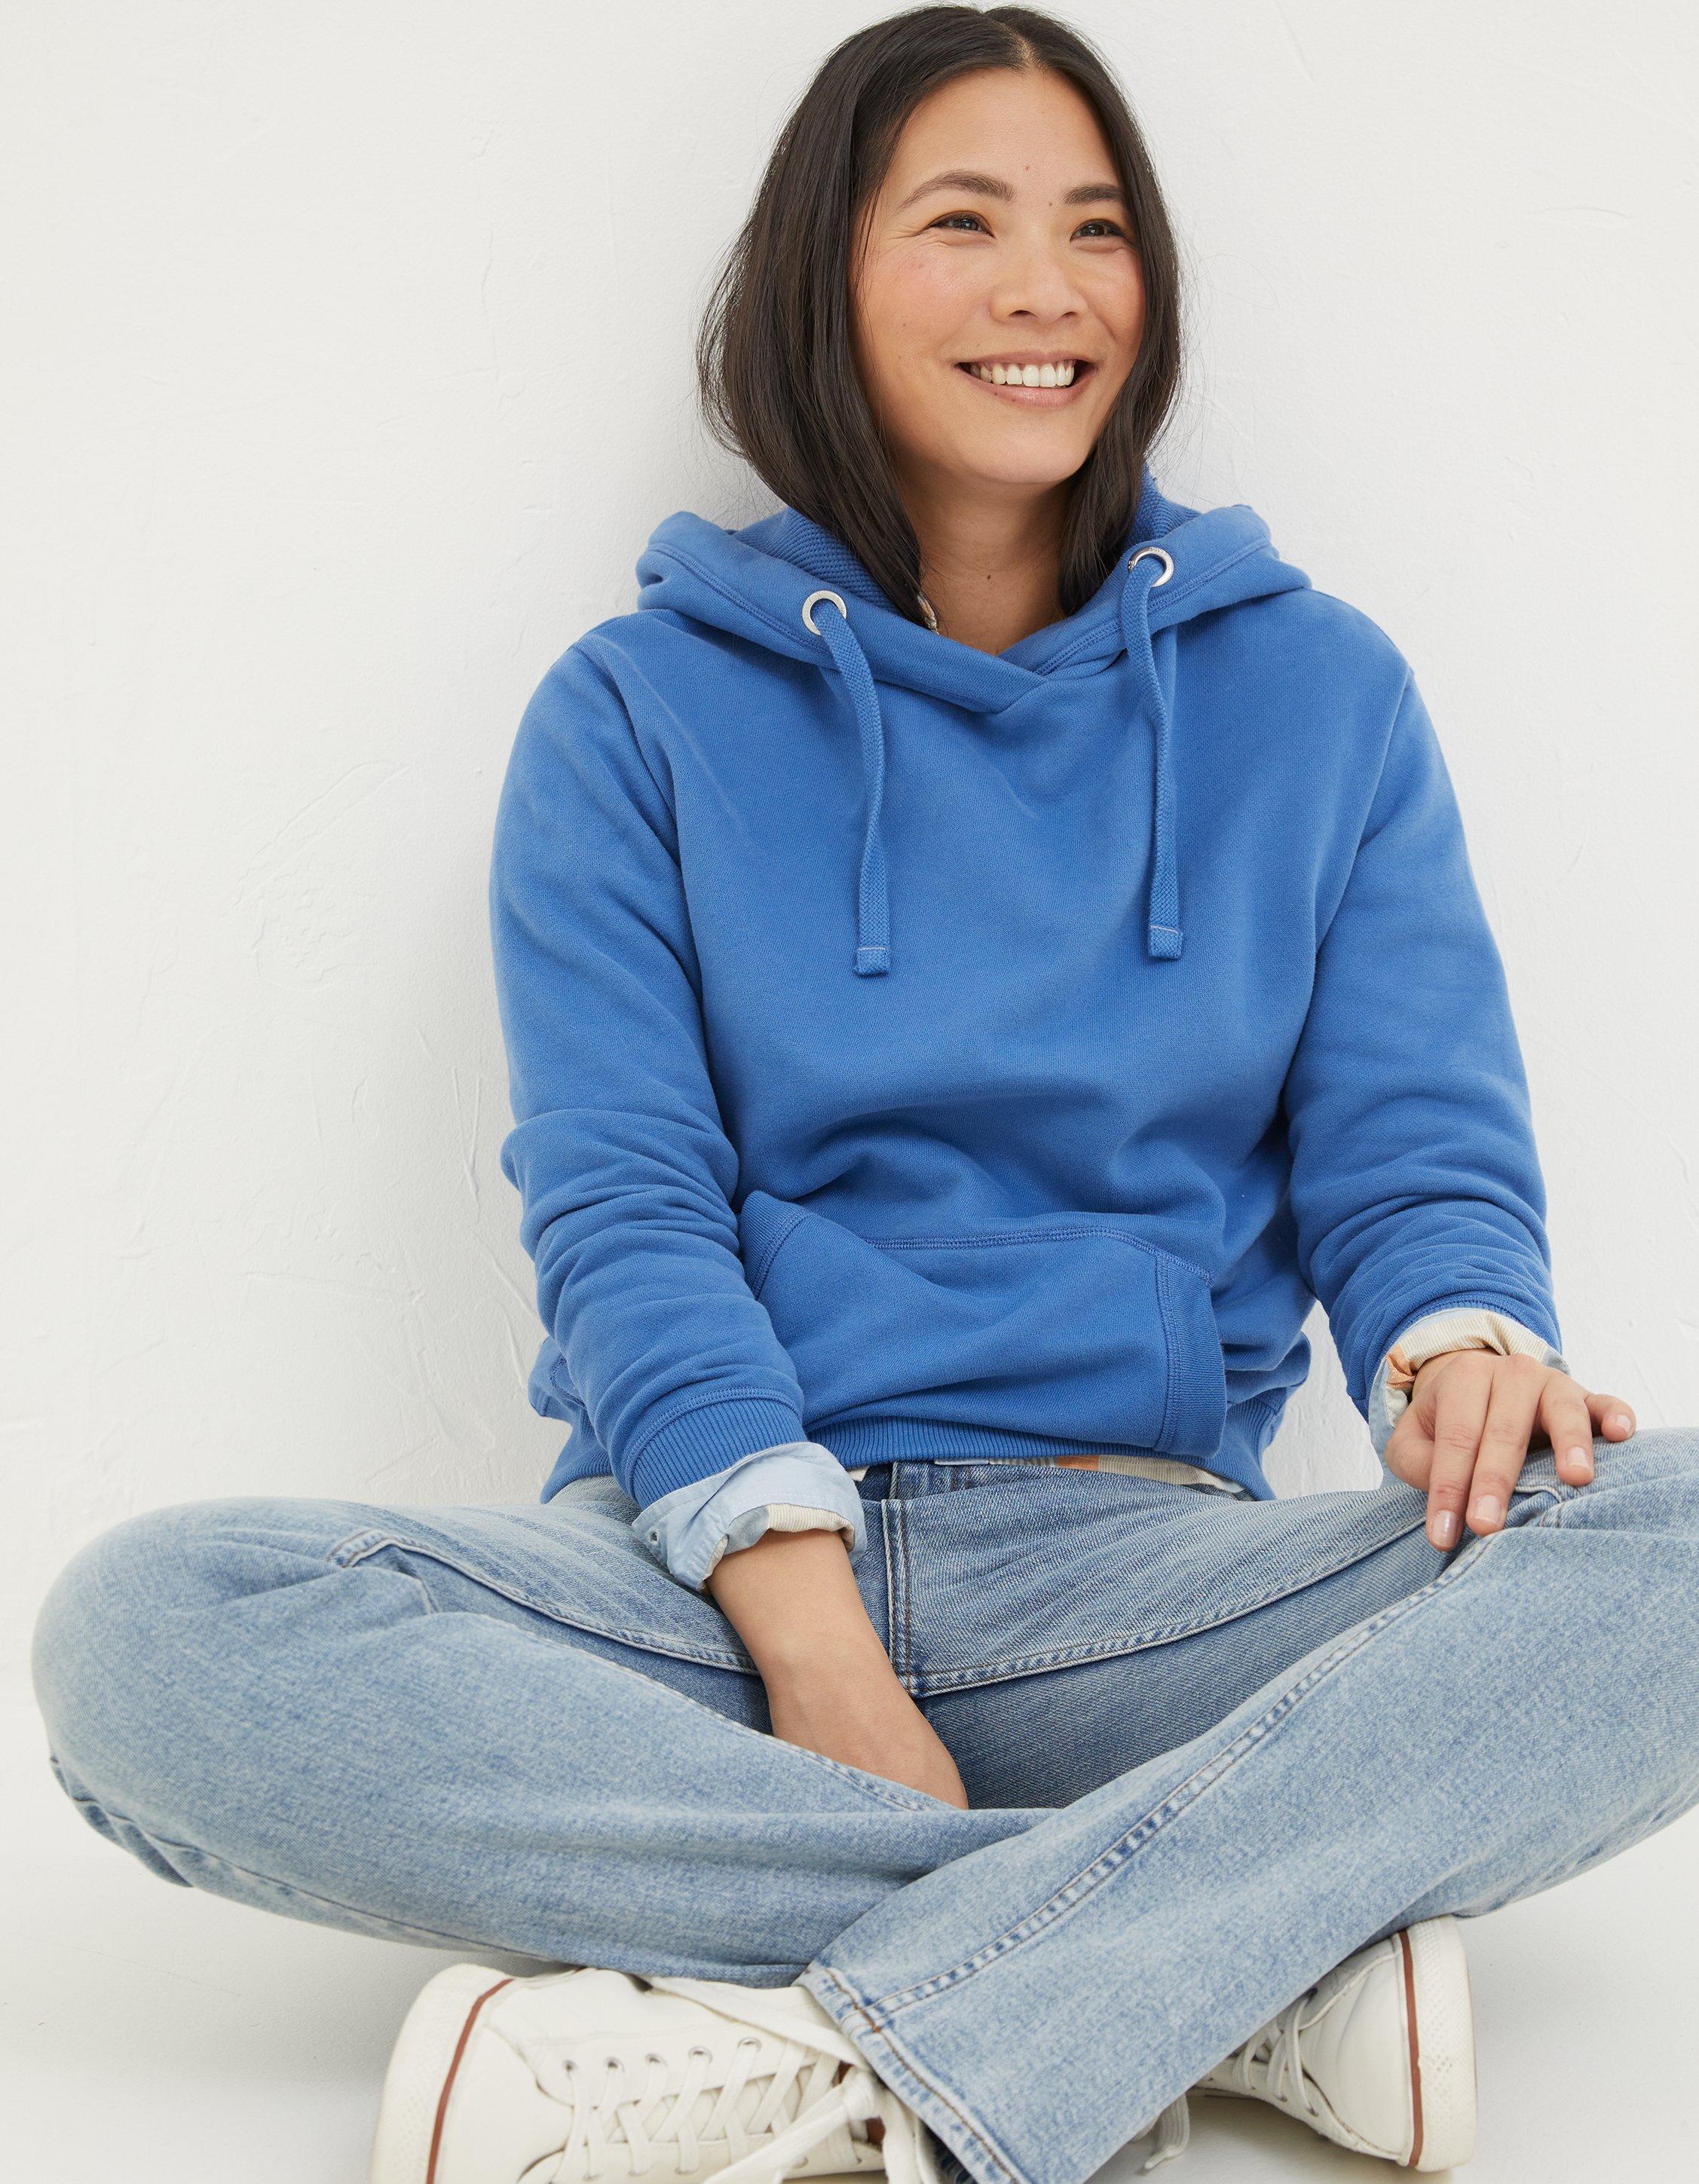 Women's Blue Sweatshirts & Hoodies